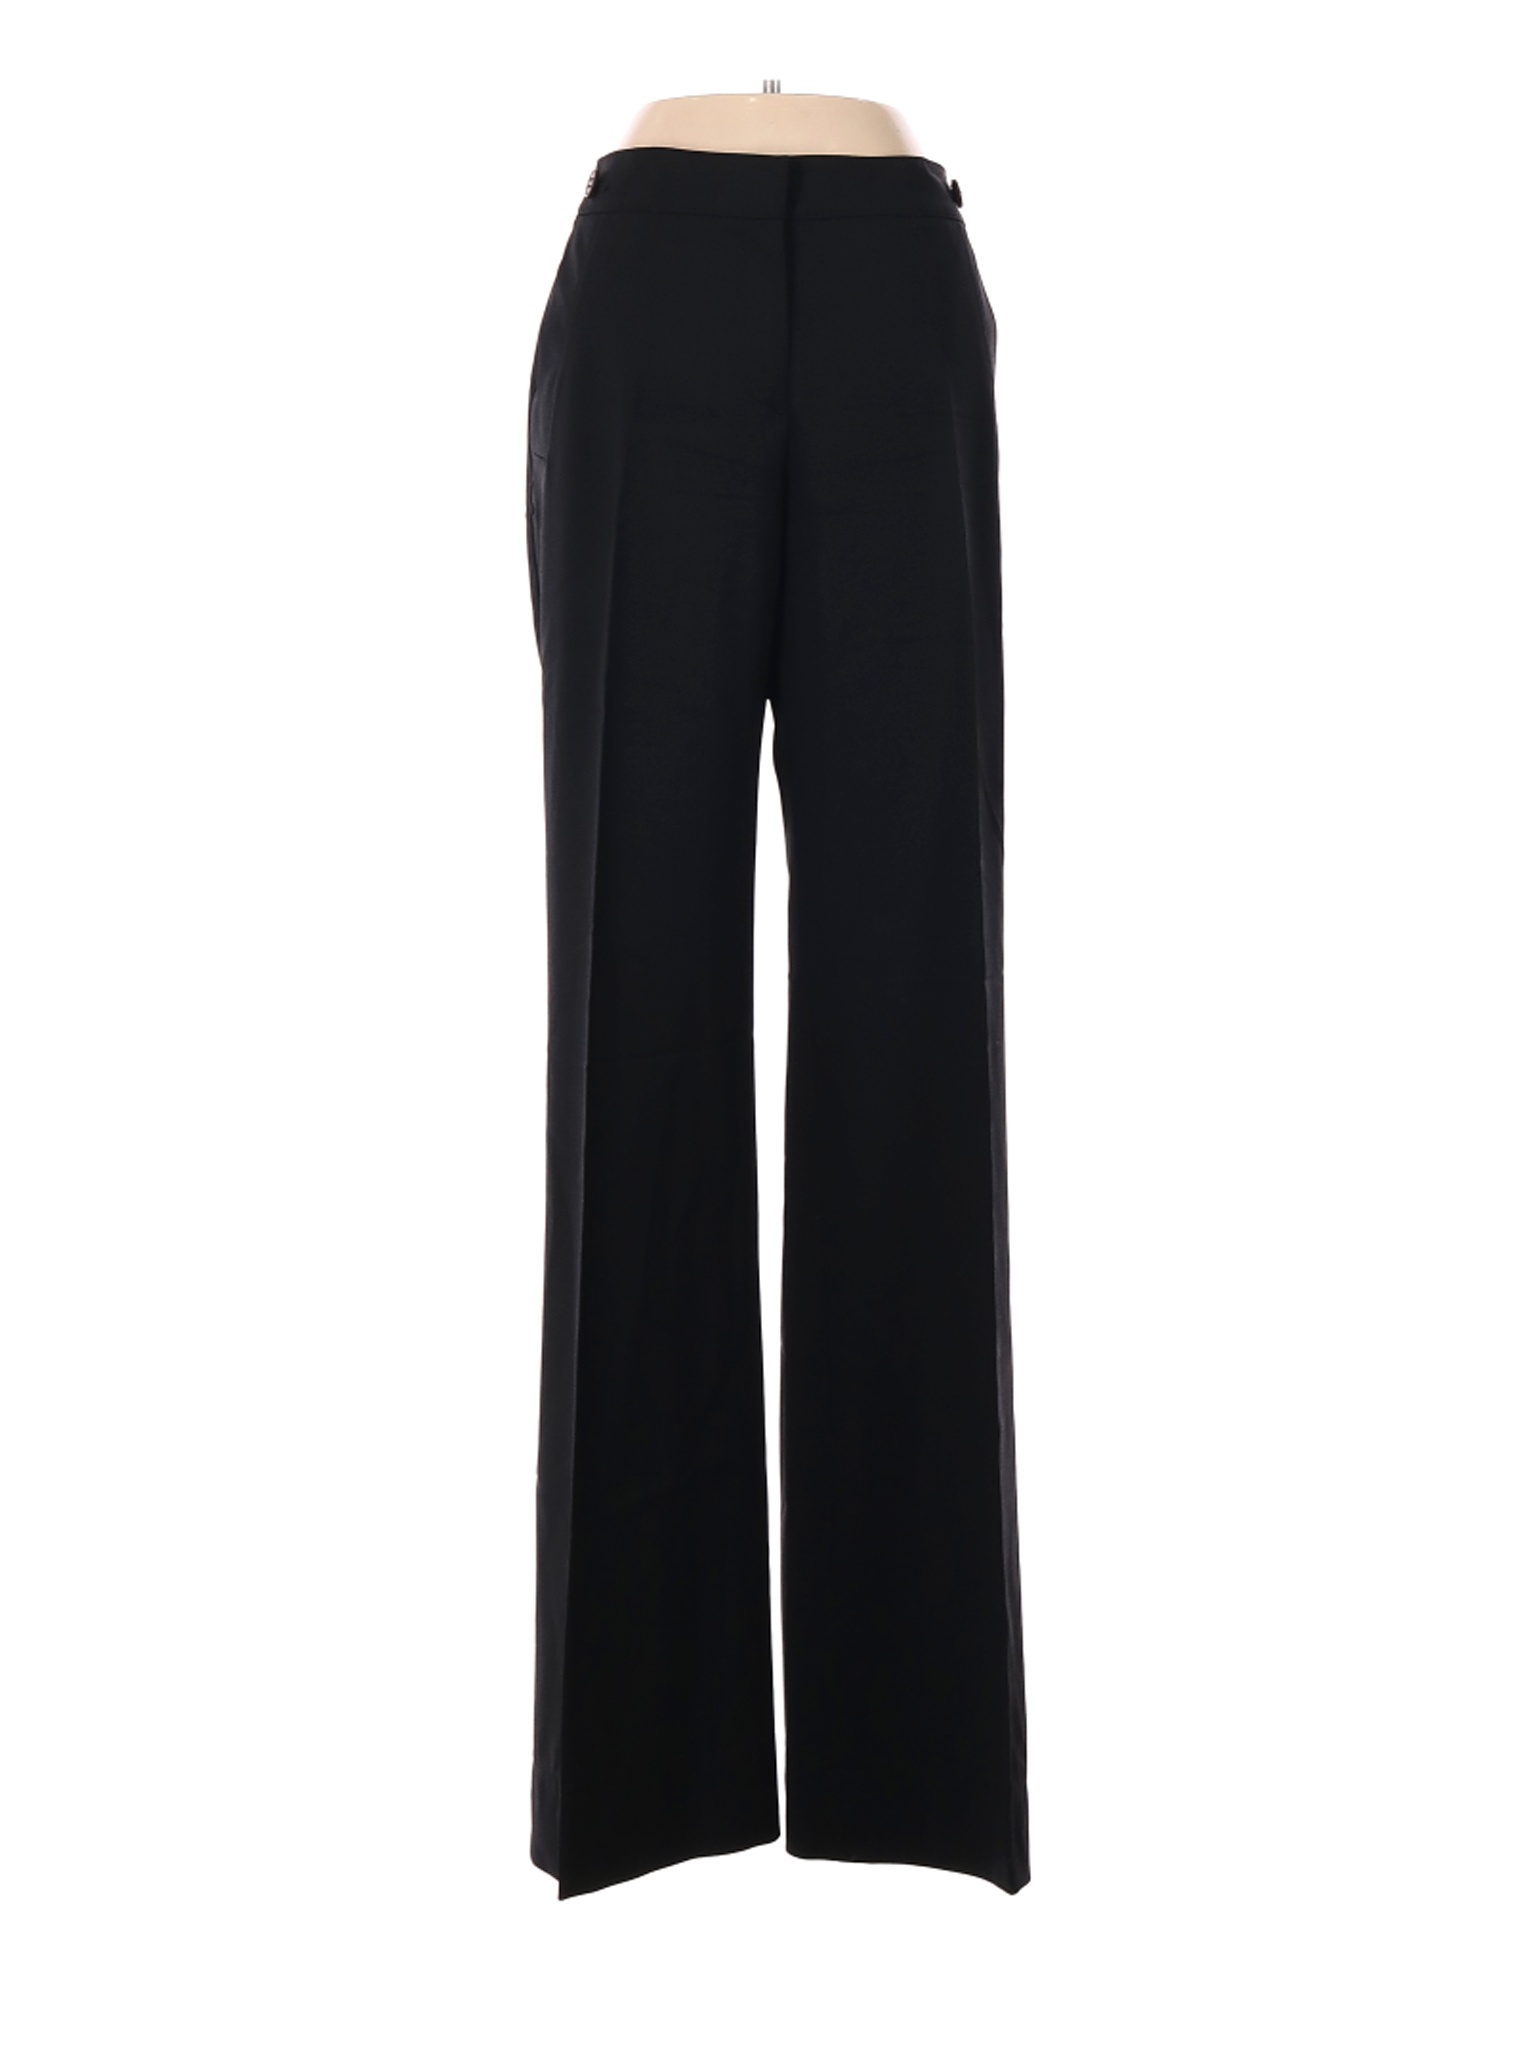 PREMISE Women Black Wool Pants 4 | eBay